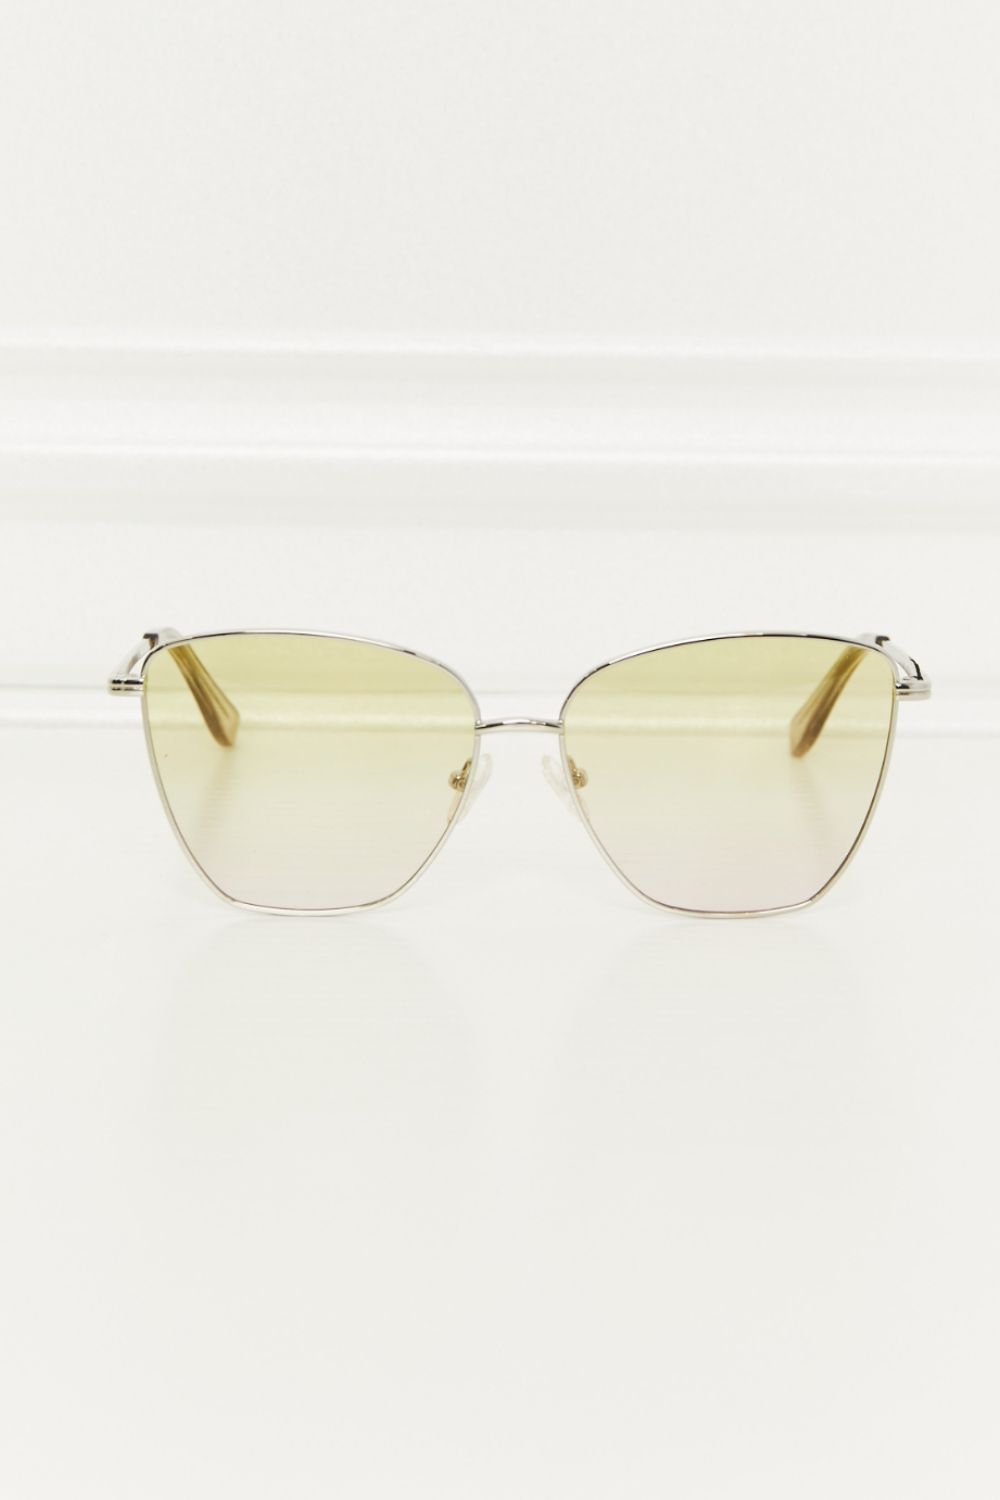 Metal Frame Full Rim Sunglasses Print on any thing USA/STOD clothes